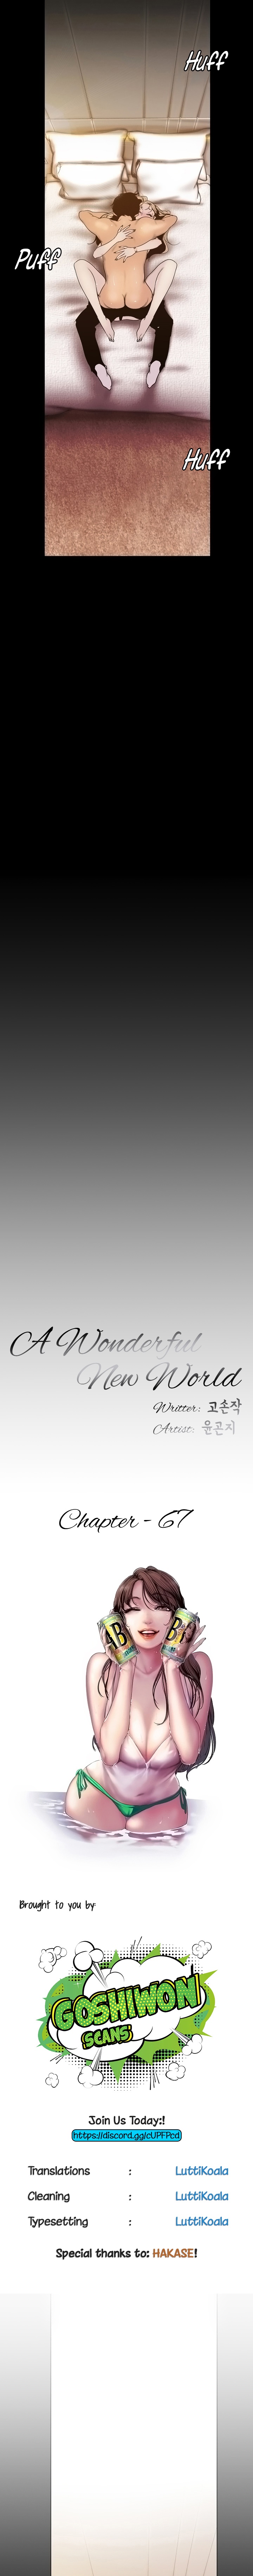 A Wonderful New World - Chapter 67 Page 9